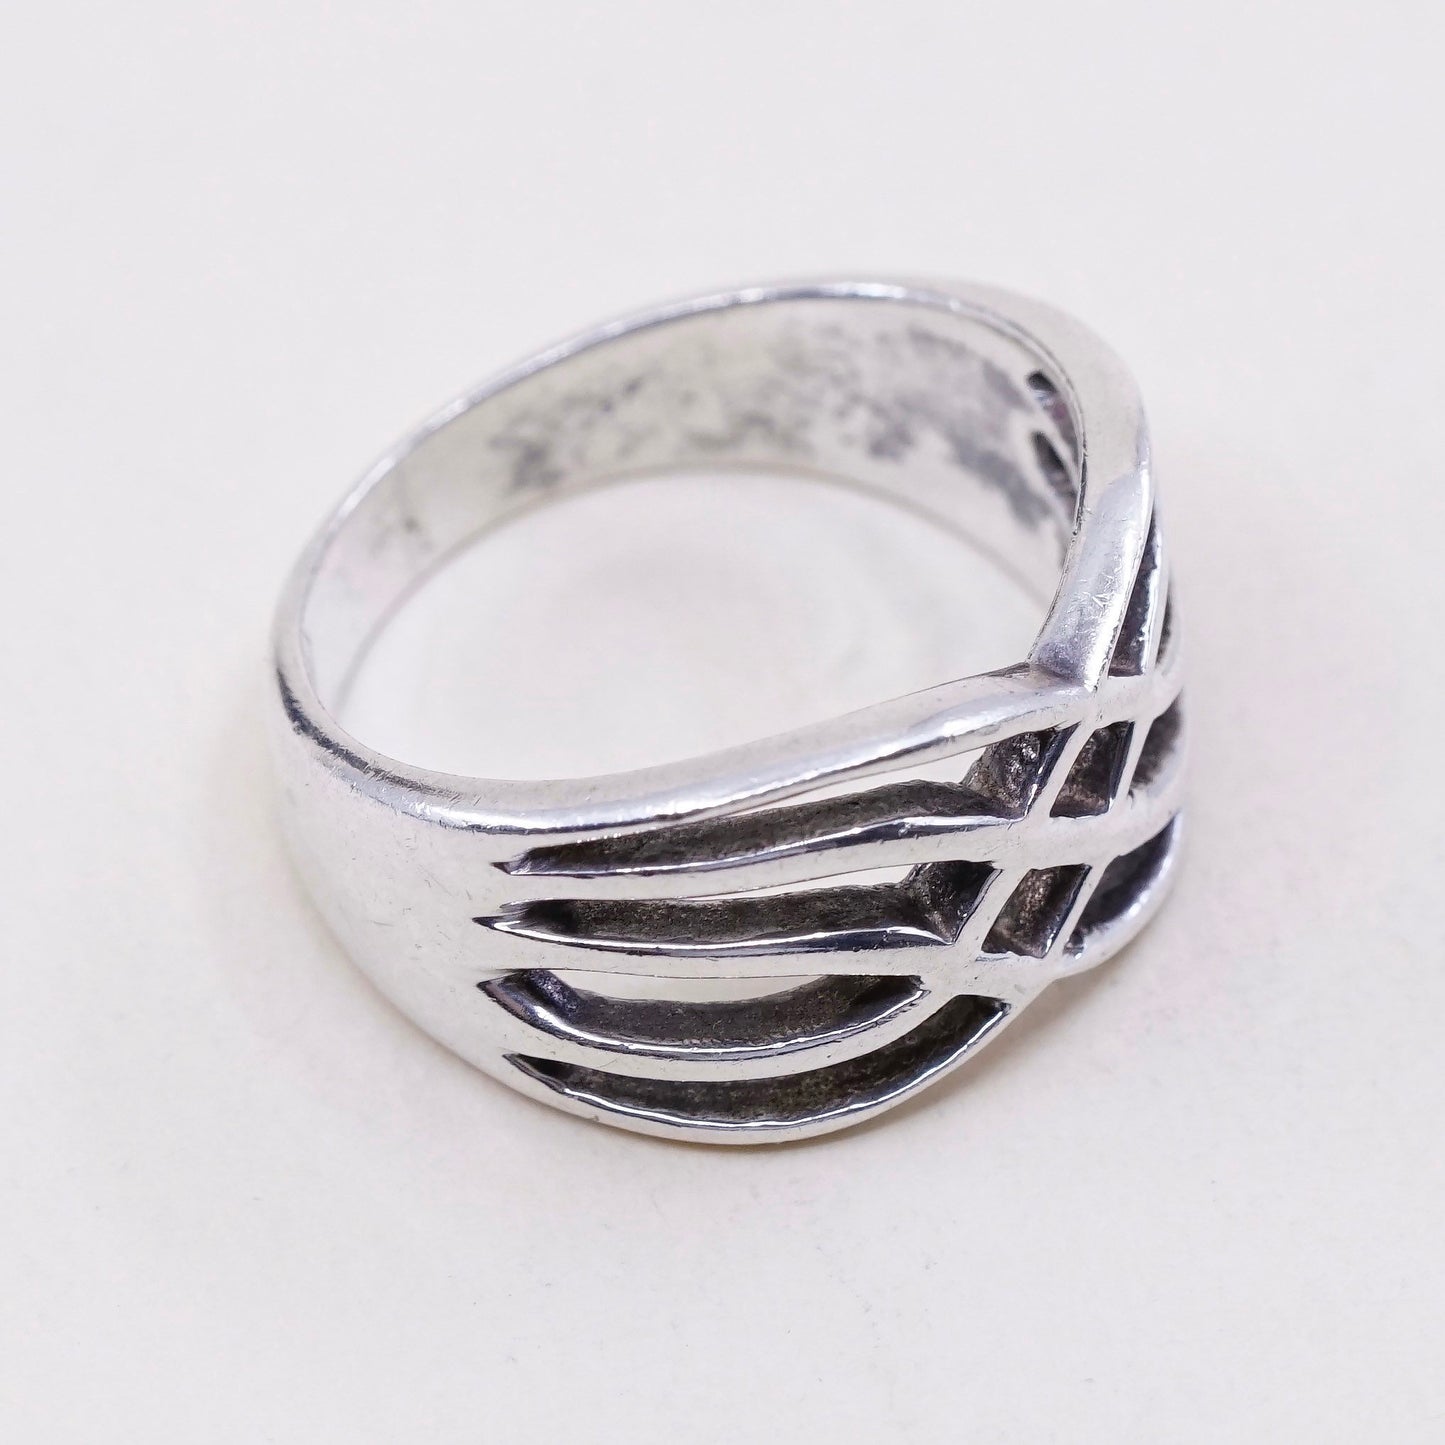 sz 7, vtg sterling silver handmade entwined ring, 925 band minimalist modernist